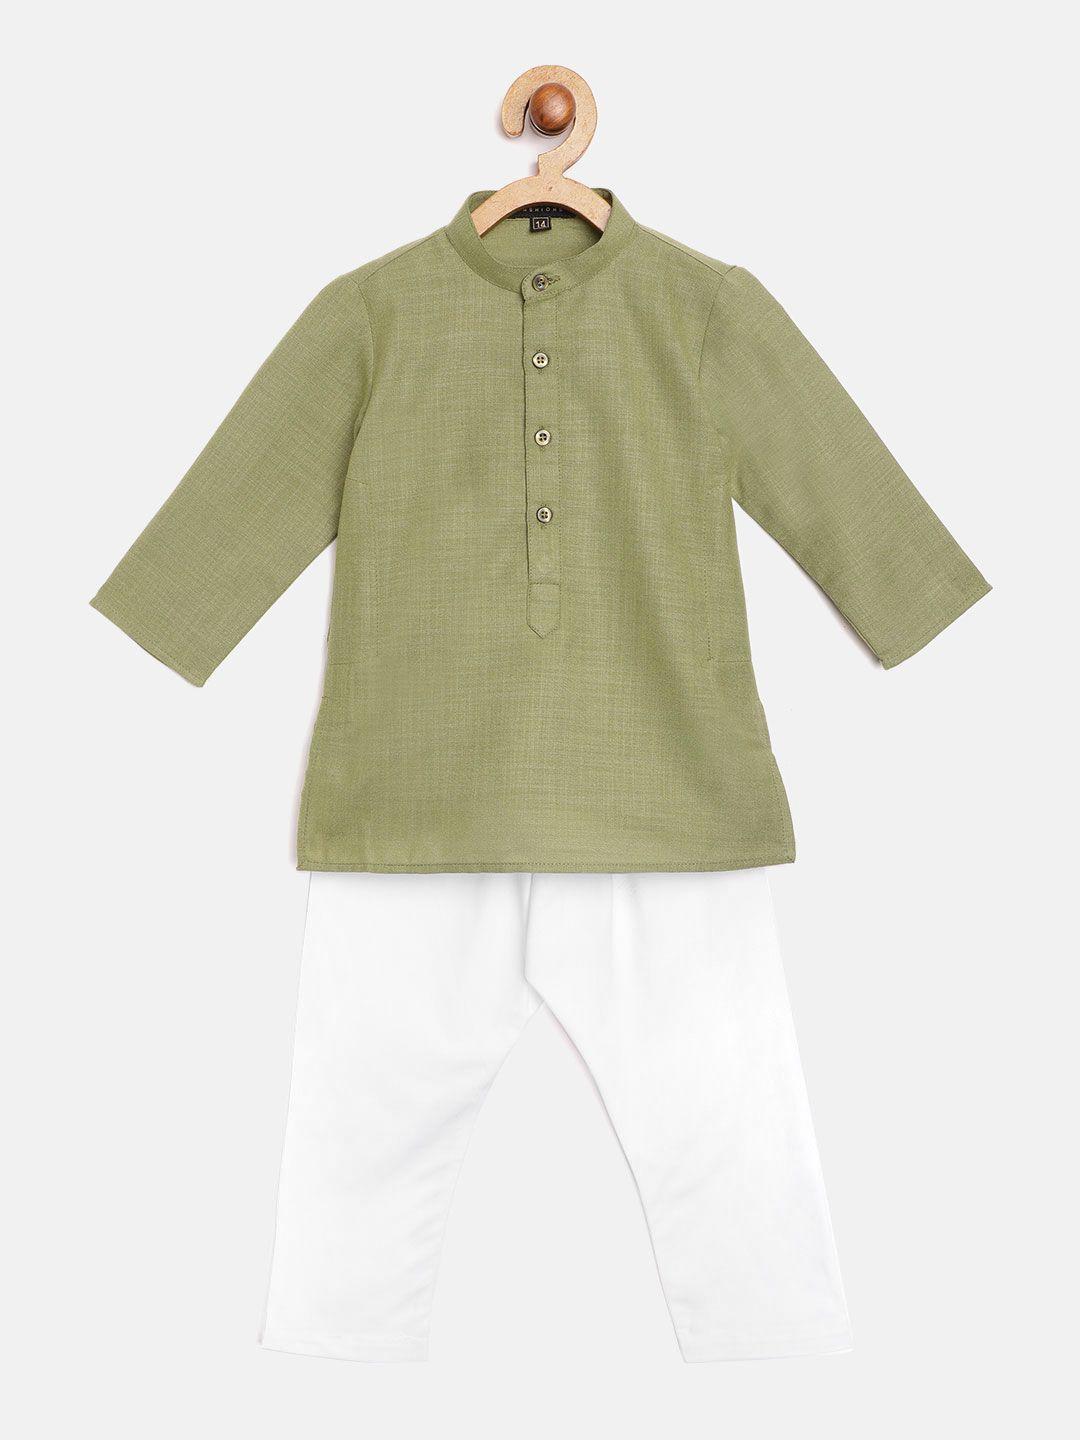 readiprint fashions boys olive green kurta with pyjamas